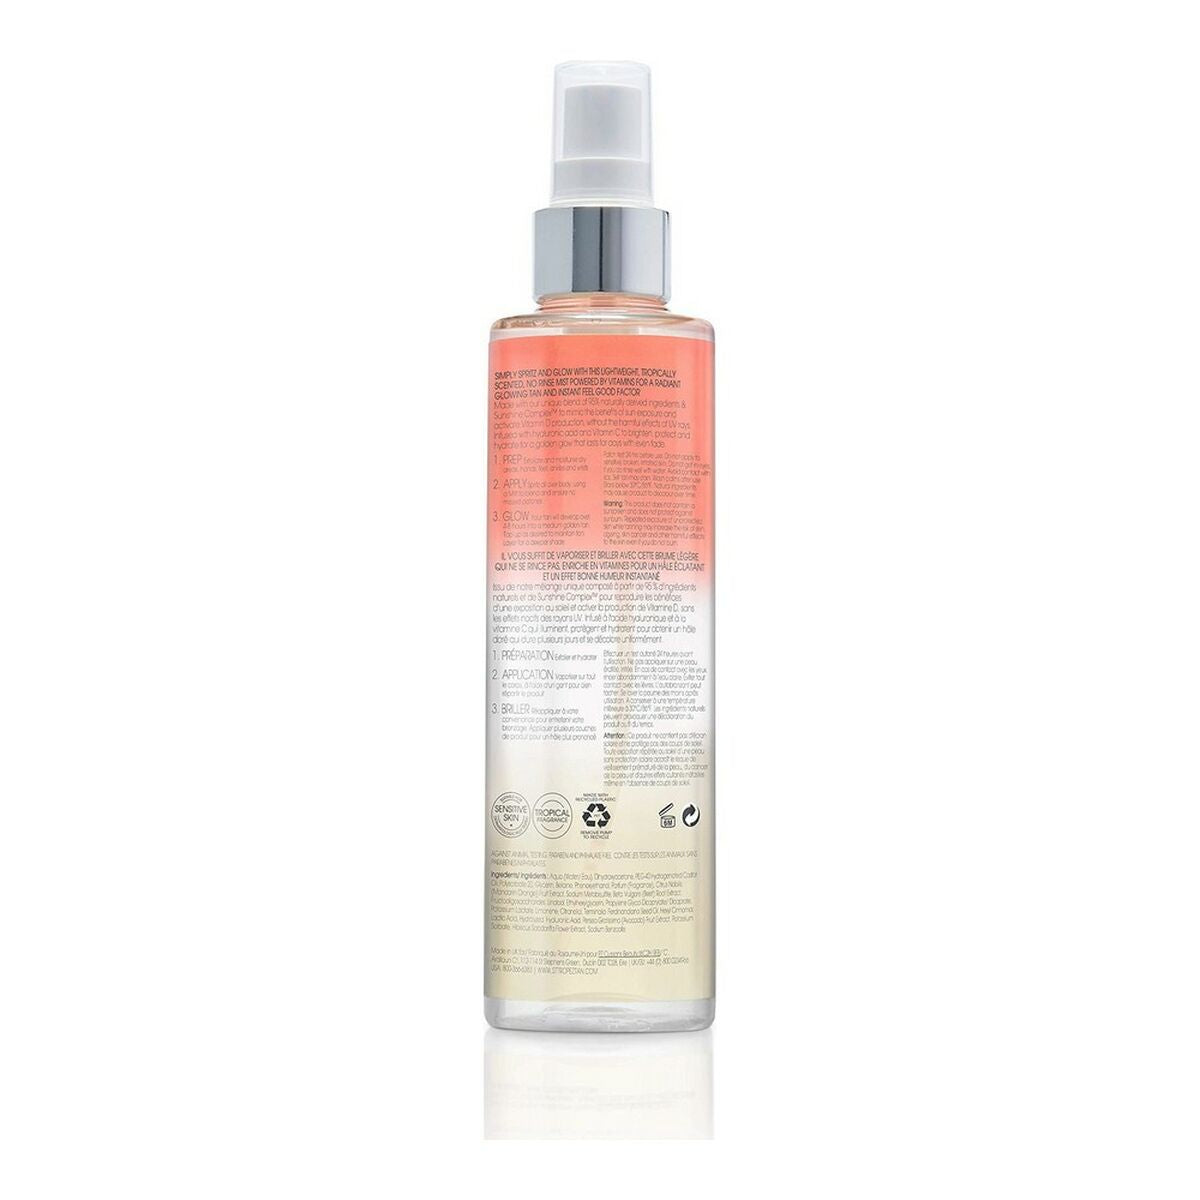 Spray Spray St.Tropez Self Tan Purity Vitamins Mist (200 ml)